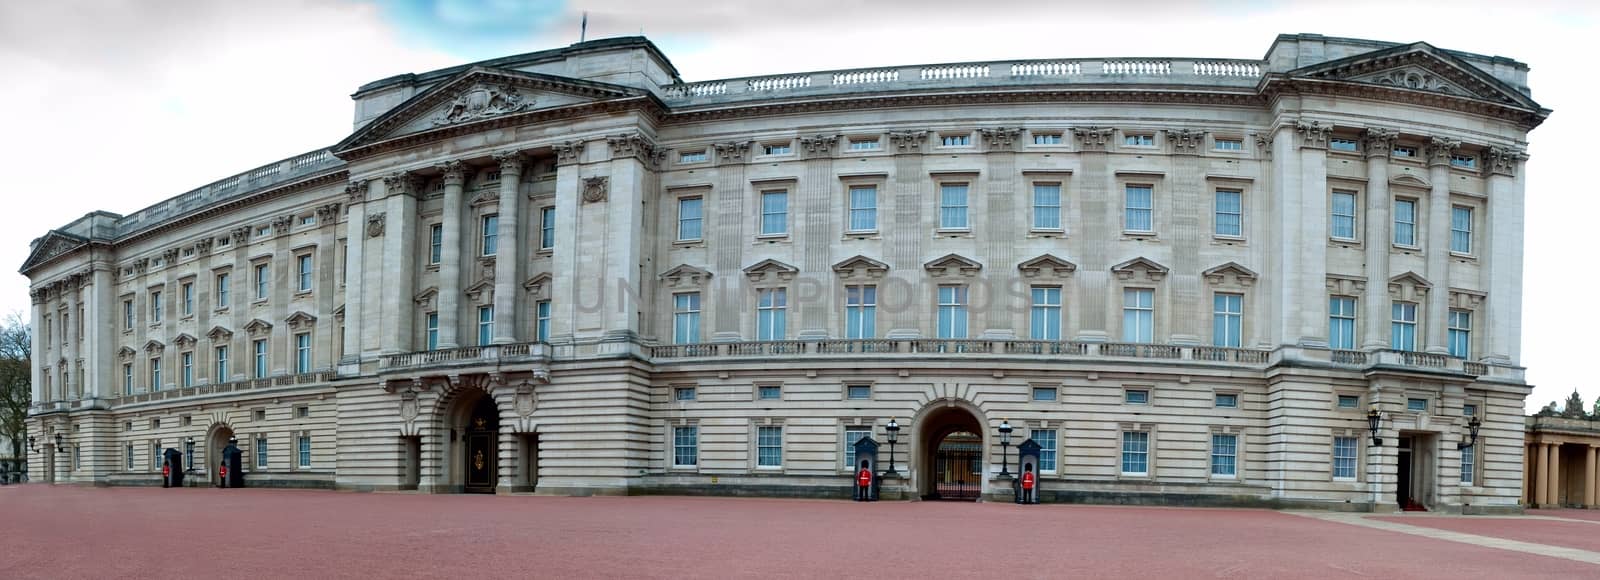 London - Buckingham palace by mitakag